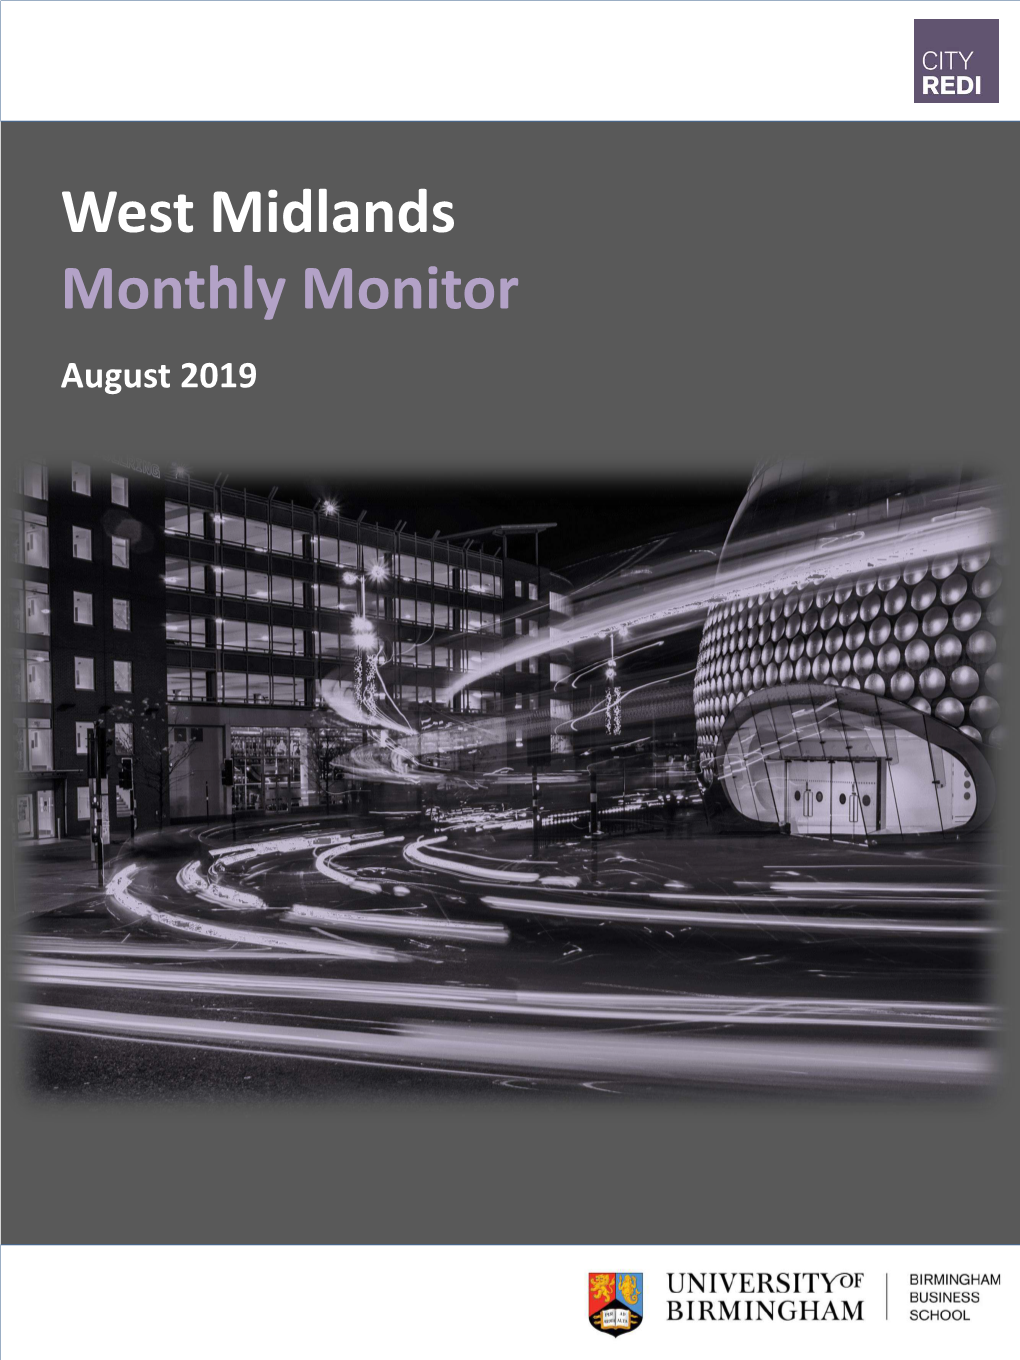 West Midlands Economic Monitor